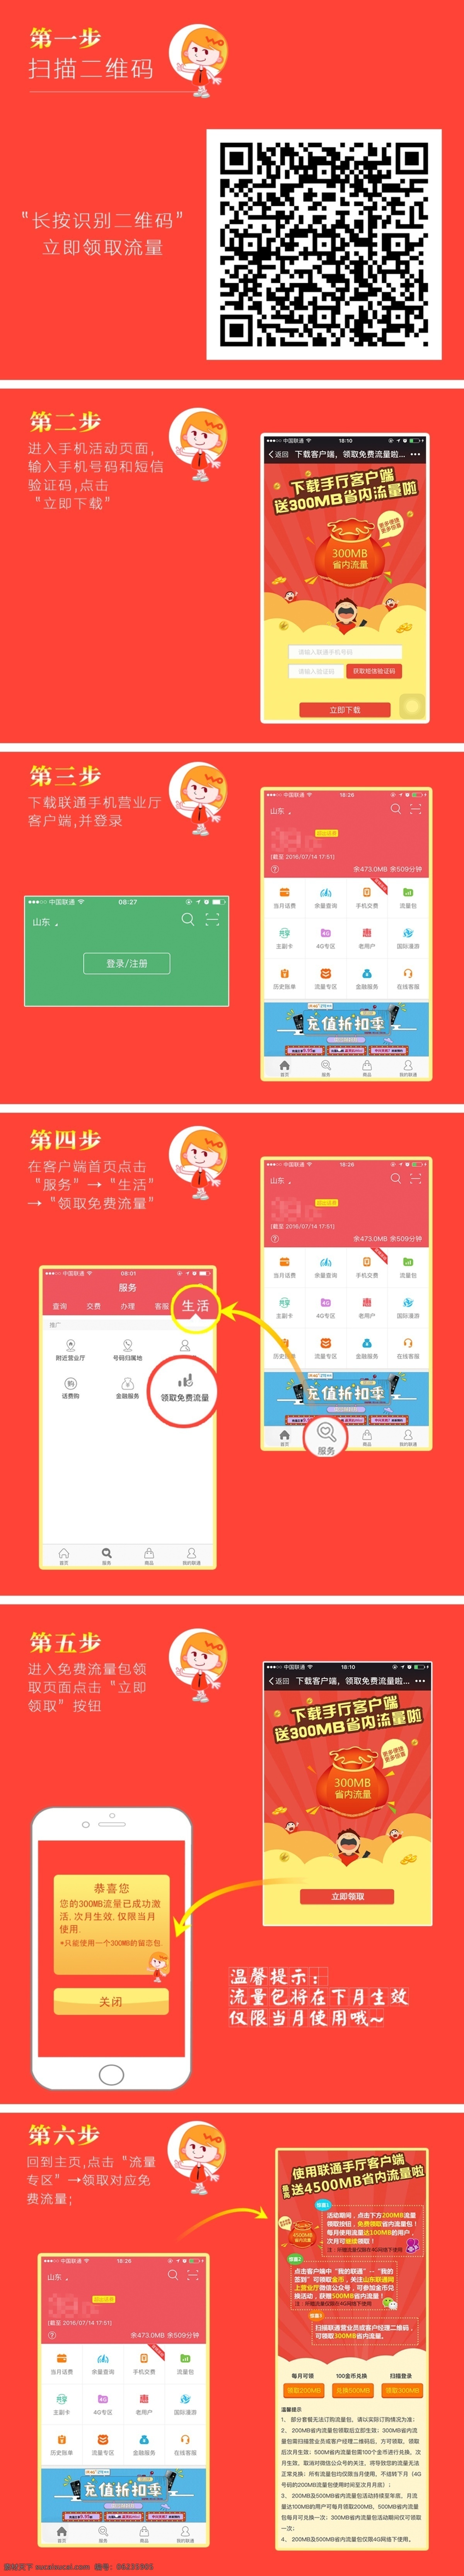 h5 中国联通 流量 广告 图 联通手机广告 手机h5 手机广告 免费流量 红色